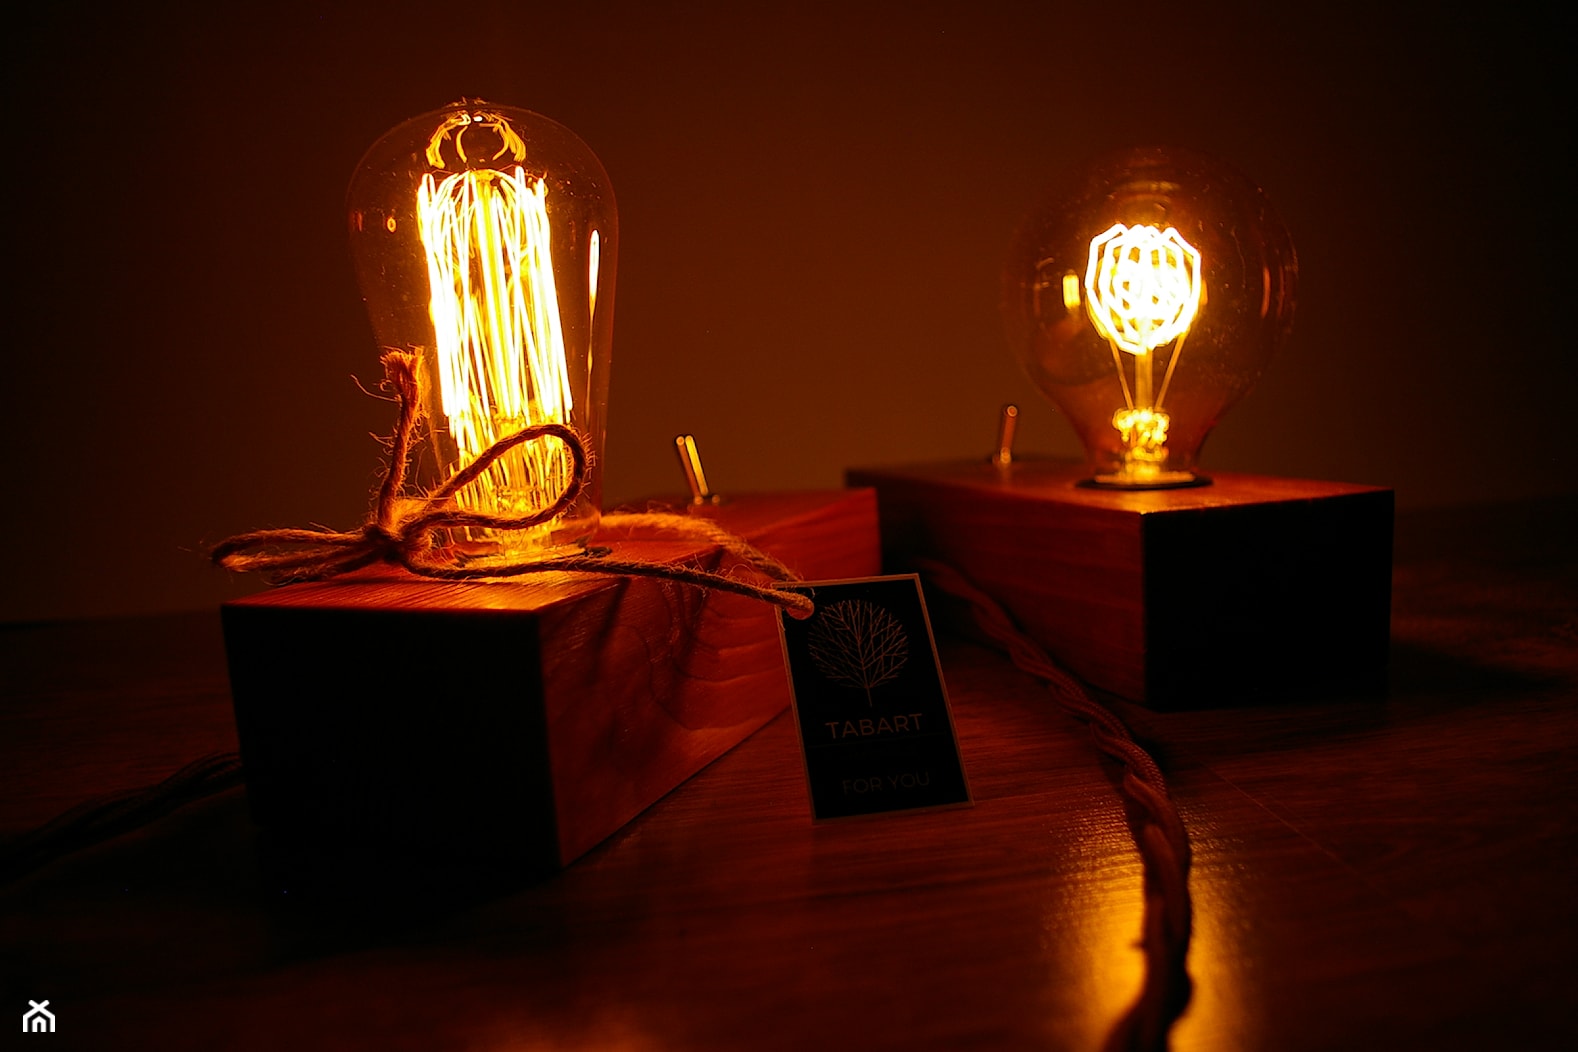 Lampki Tabart - zdjęcie od 87tomson - Homebook